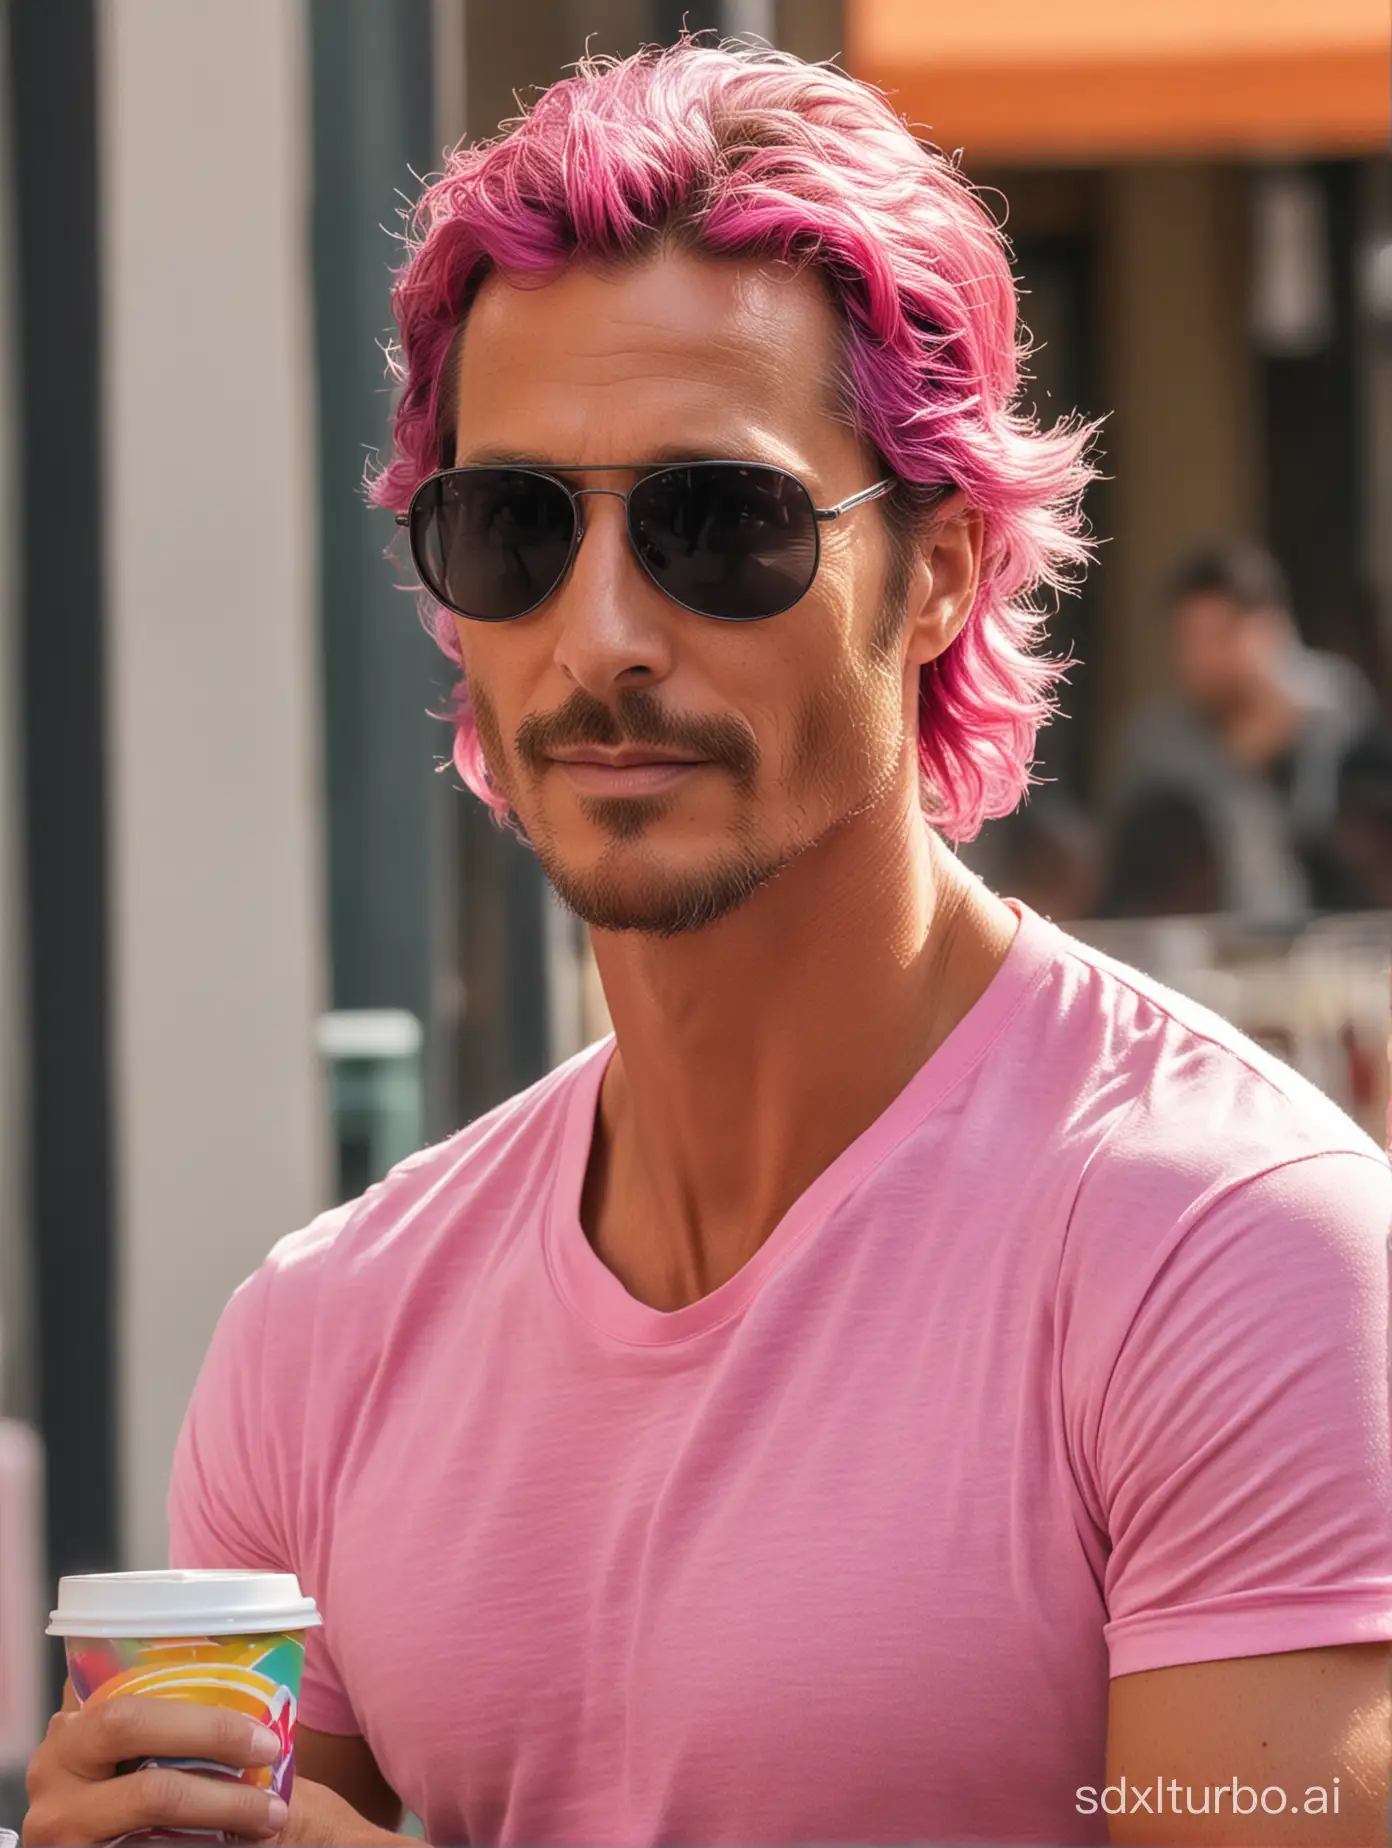 Matthew McConaughey drinks coffee, black sunglasses glasses, pink t-shirt, rainbow hair color, sidewalk cafe